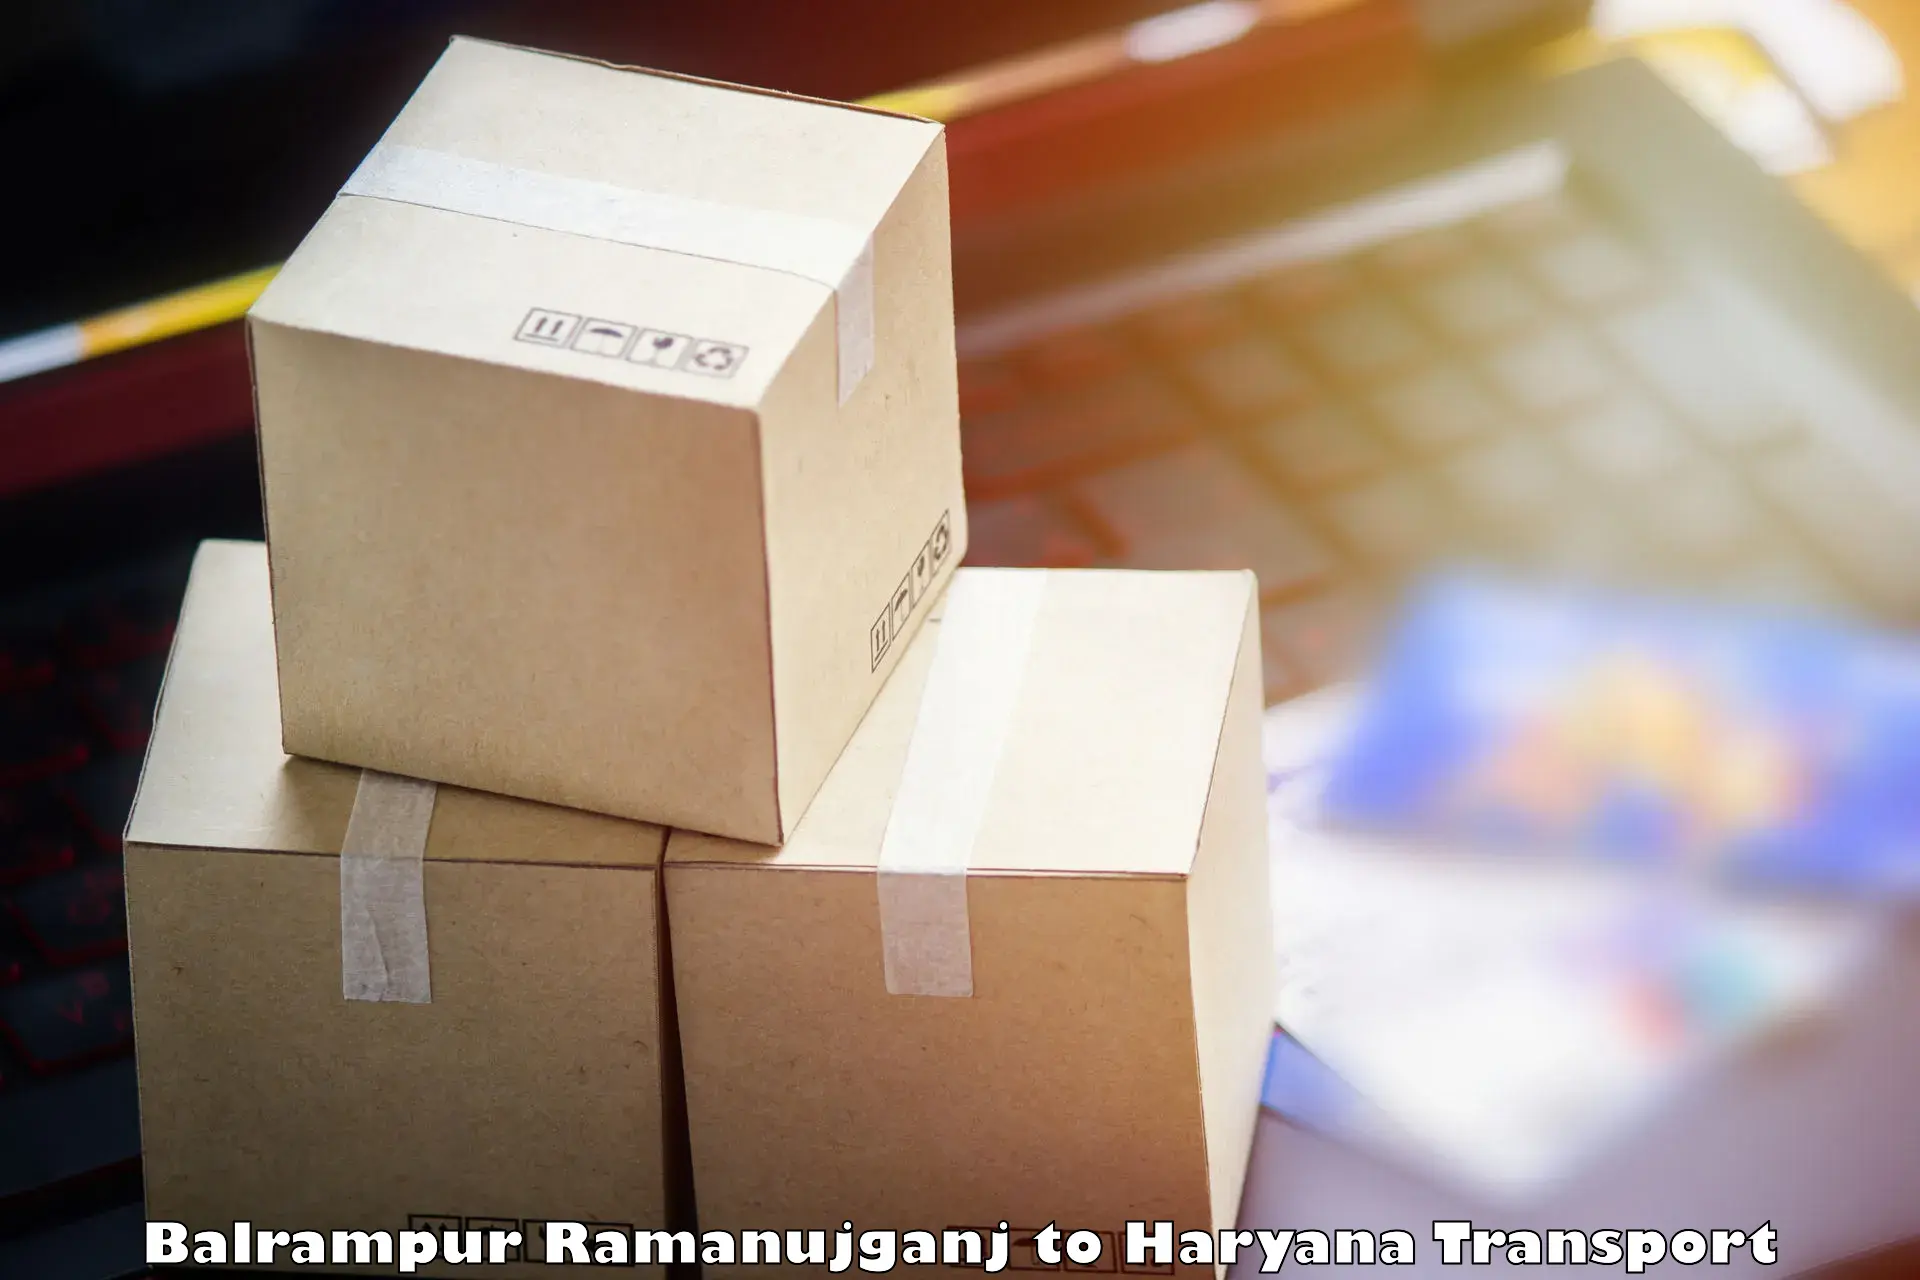 Goods delivery service Balrampur Ramanujganj to Hansi